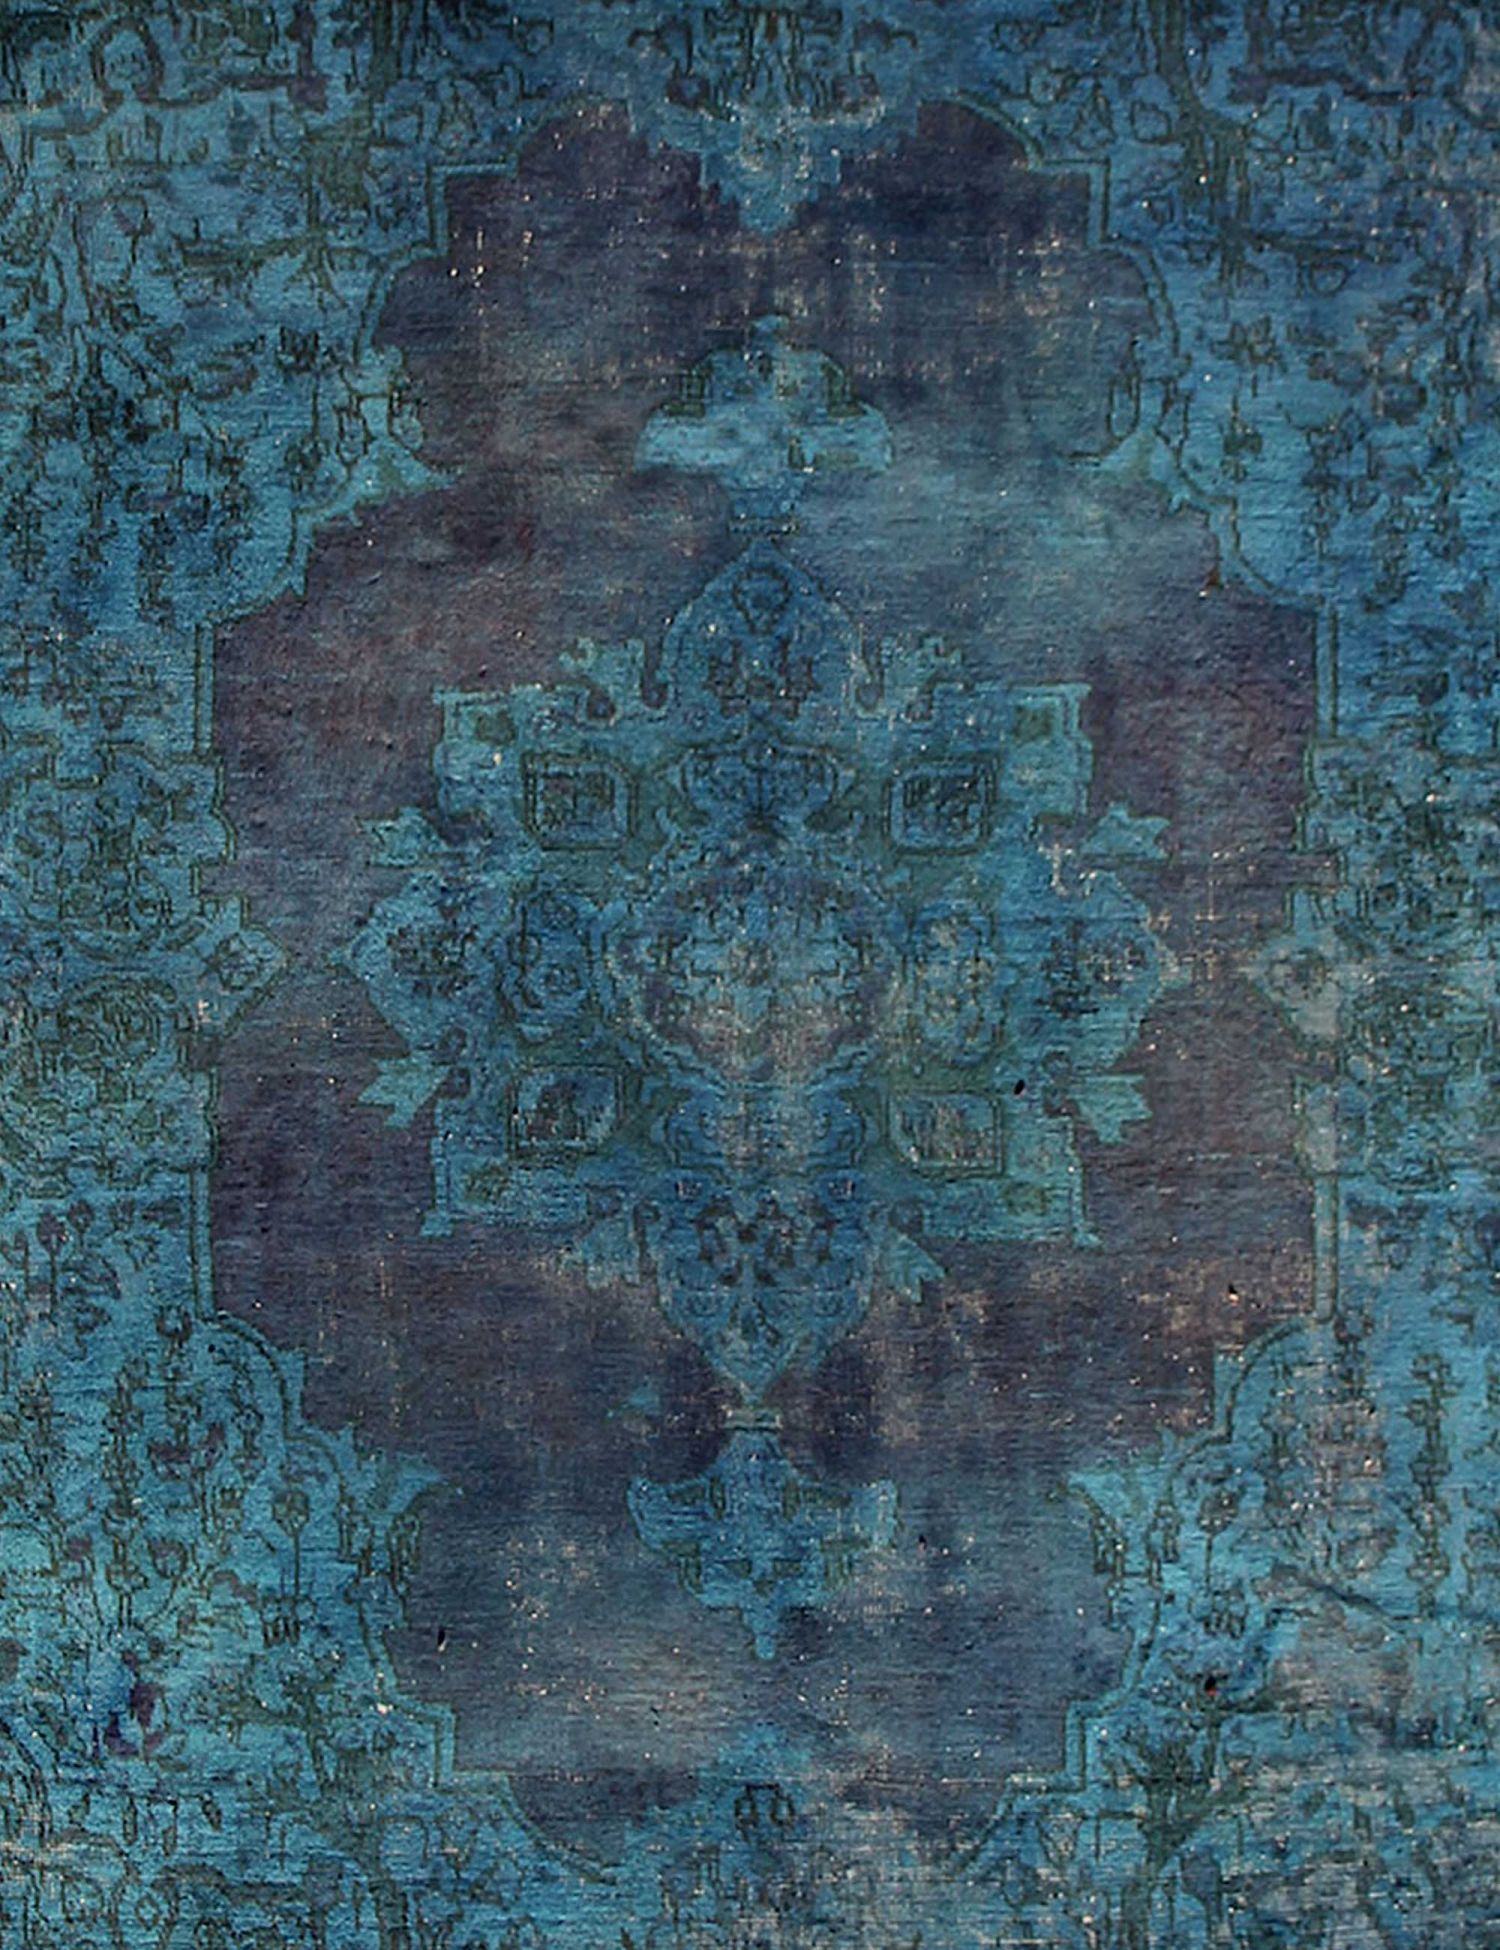 Persialaiset vintage matot  turkoosi <br/>330 x 255 cm